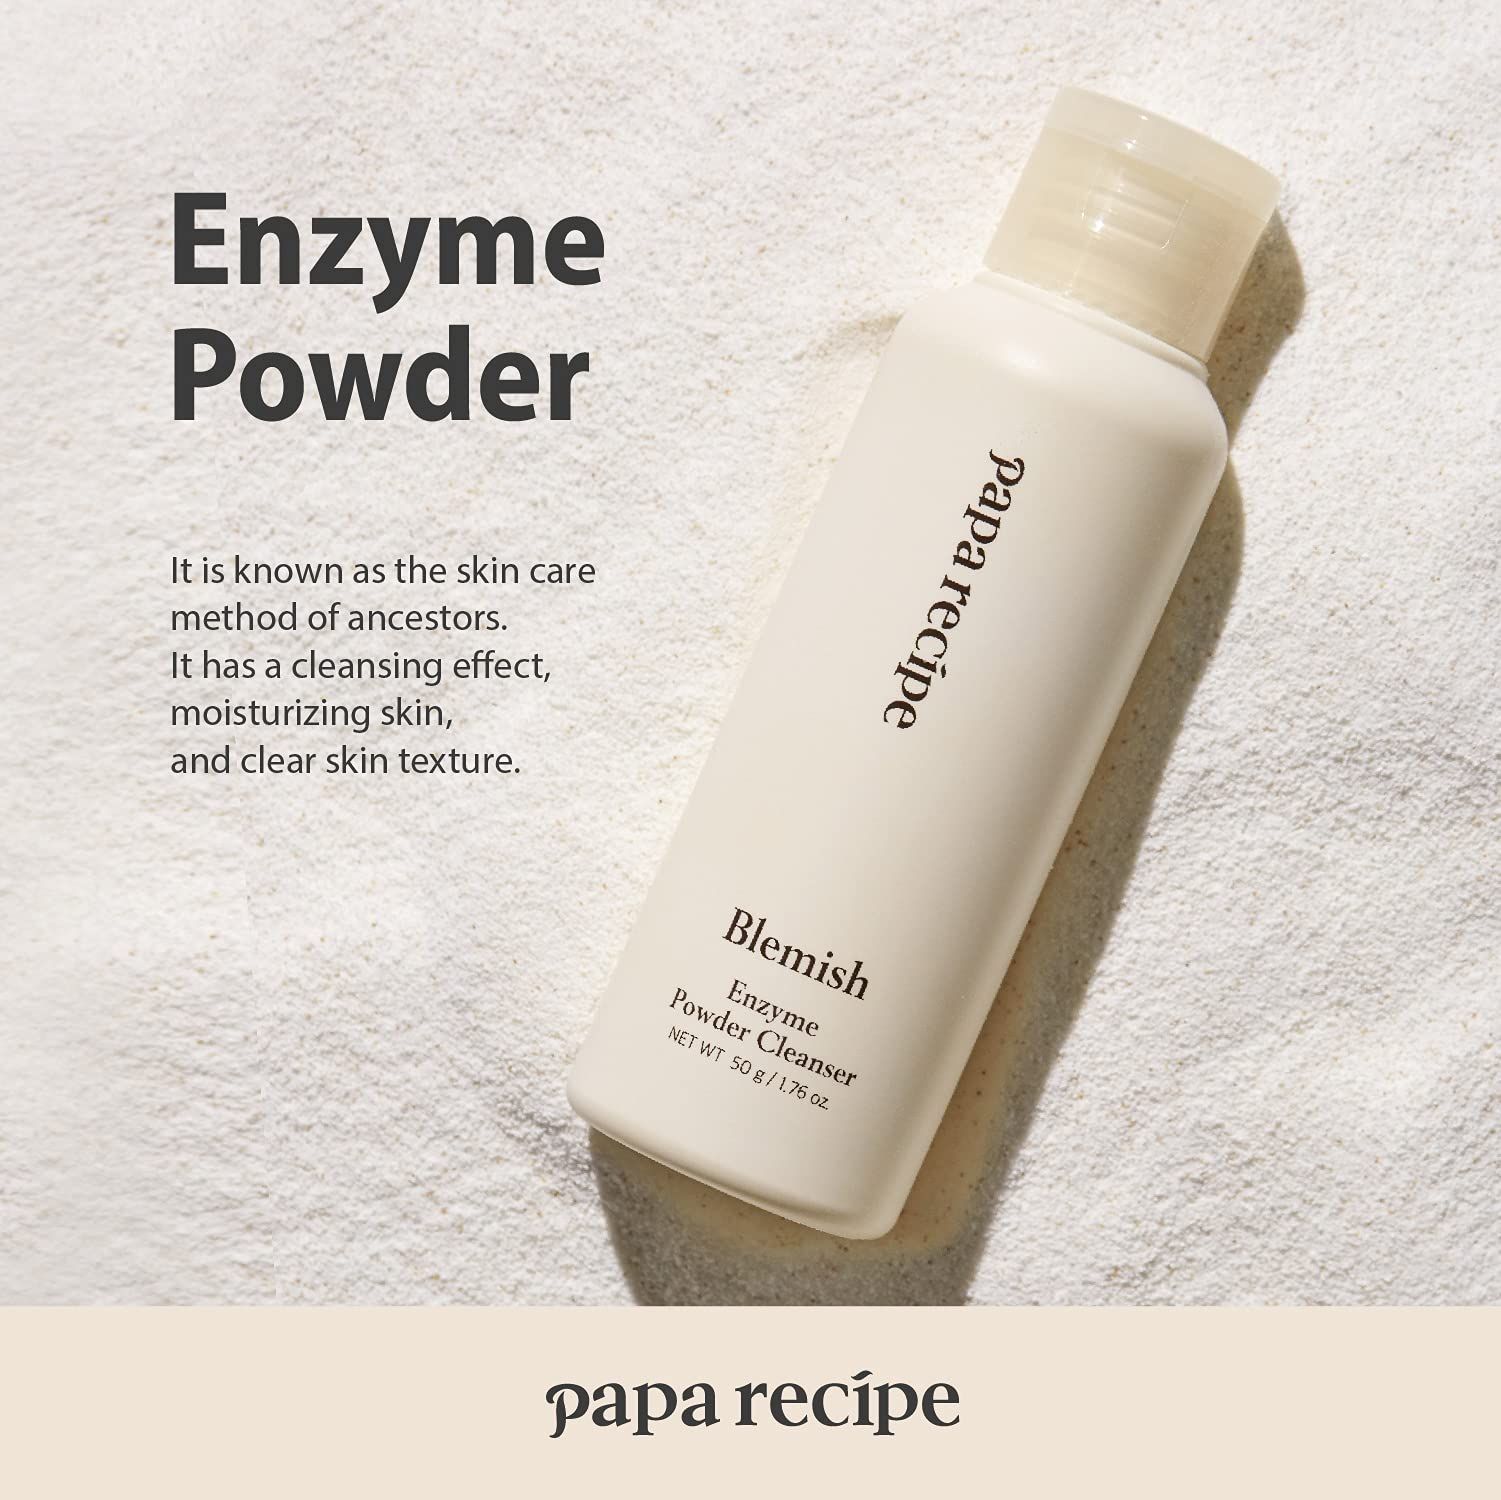 Papa recipe энзимная пудра. Glow Powder Cleanser. Papa Recipe Blemish Enzyme. Enzyme Powder порционно. Энзимная пудра после депиляции.